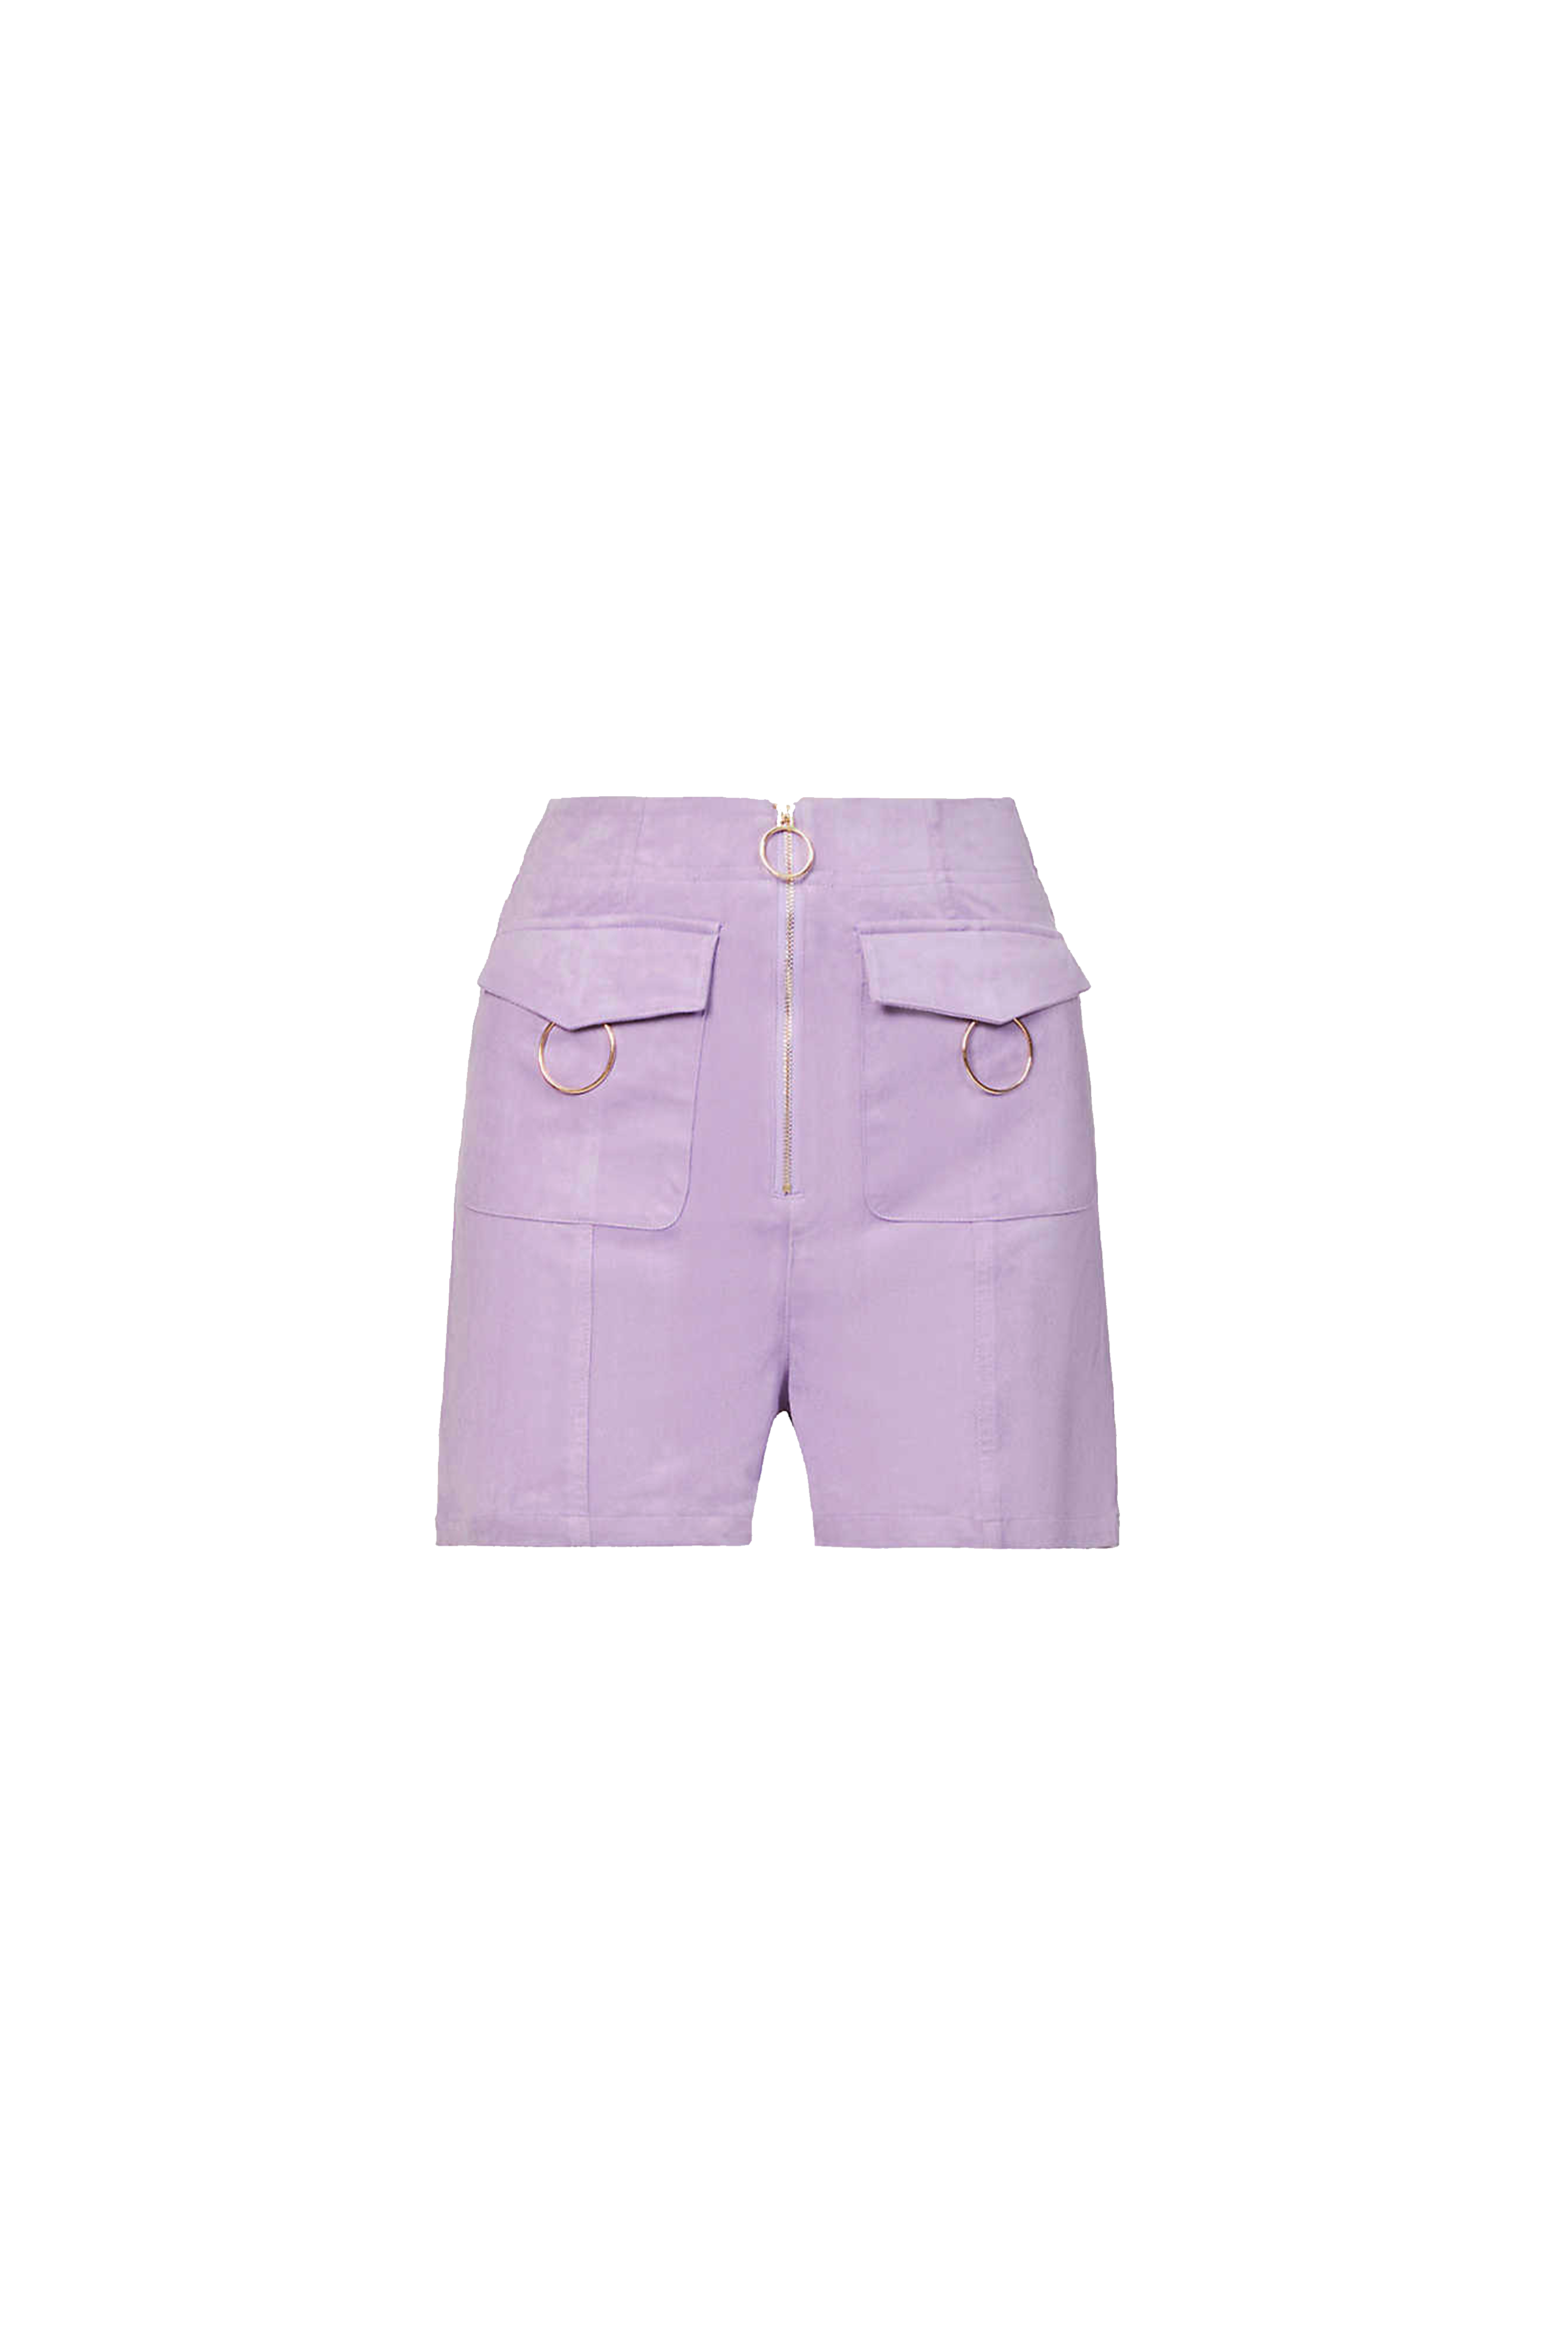 Jackson Purple Suede Shorts